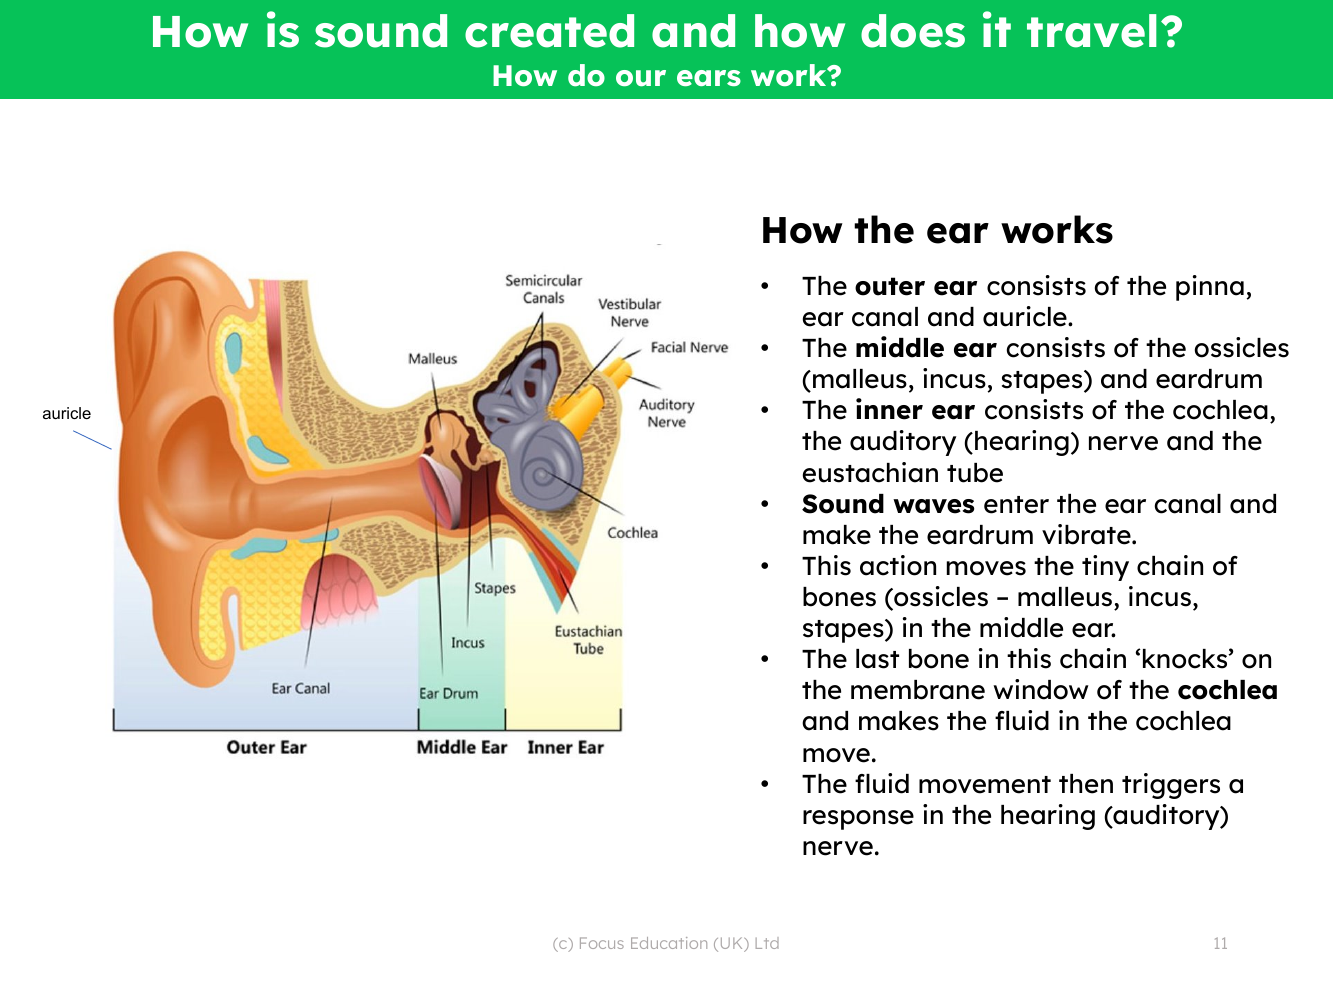 How the ear works - Info sheet